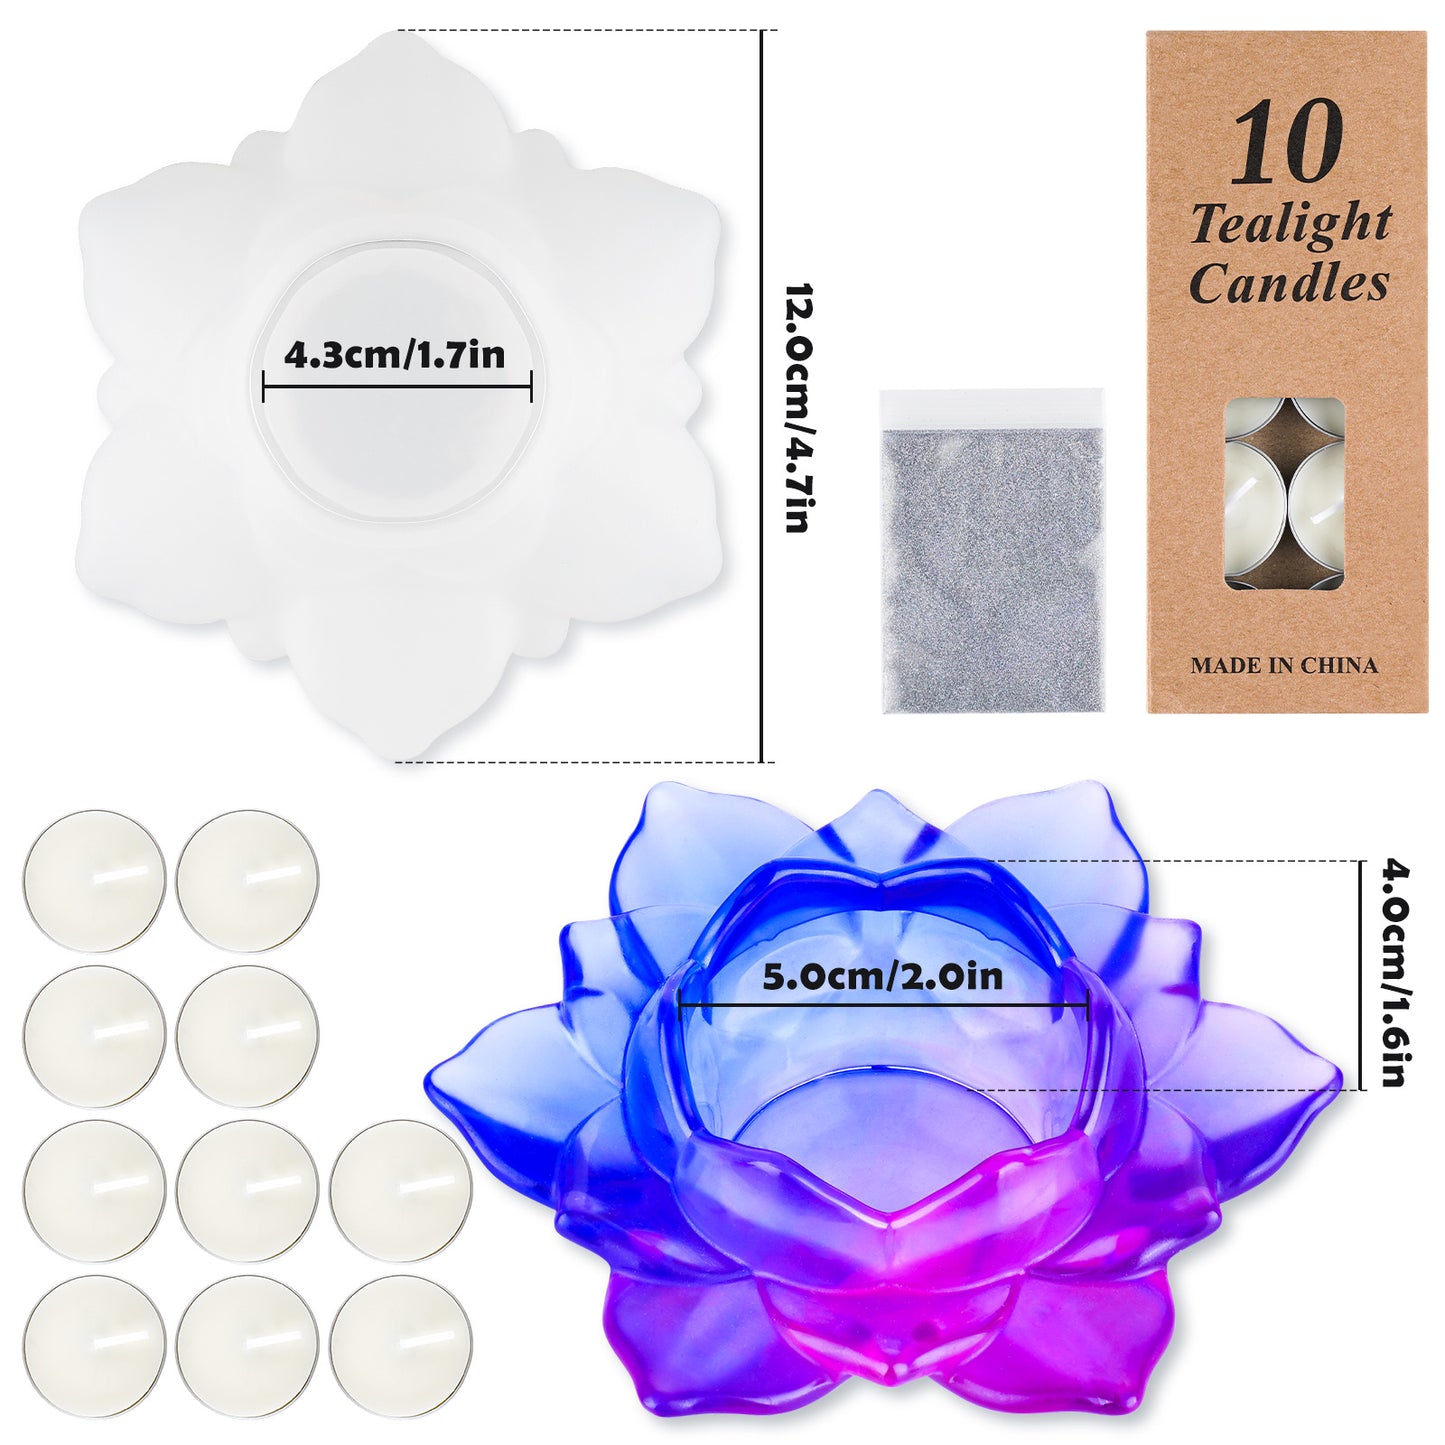 Lotus Candle Holder Epoxy Resin Casting Soft Silicone Mold Kit+10PCS Tealight